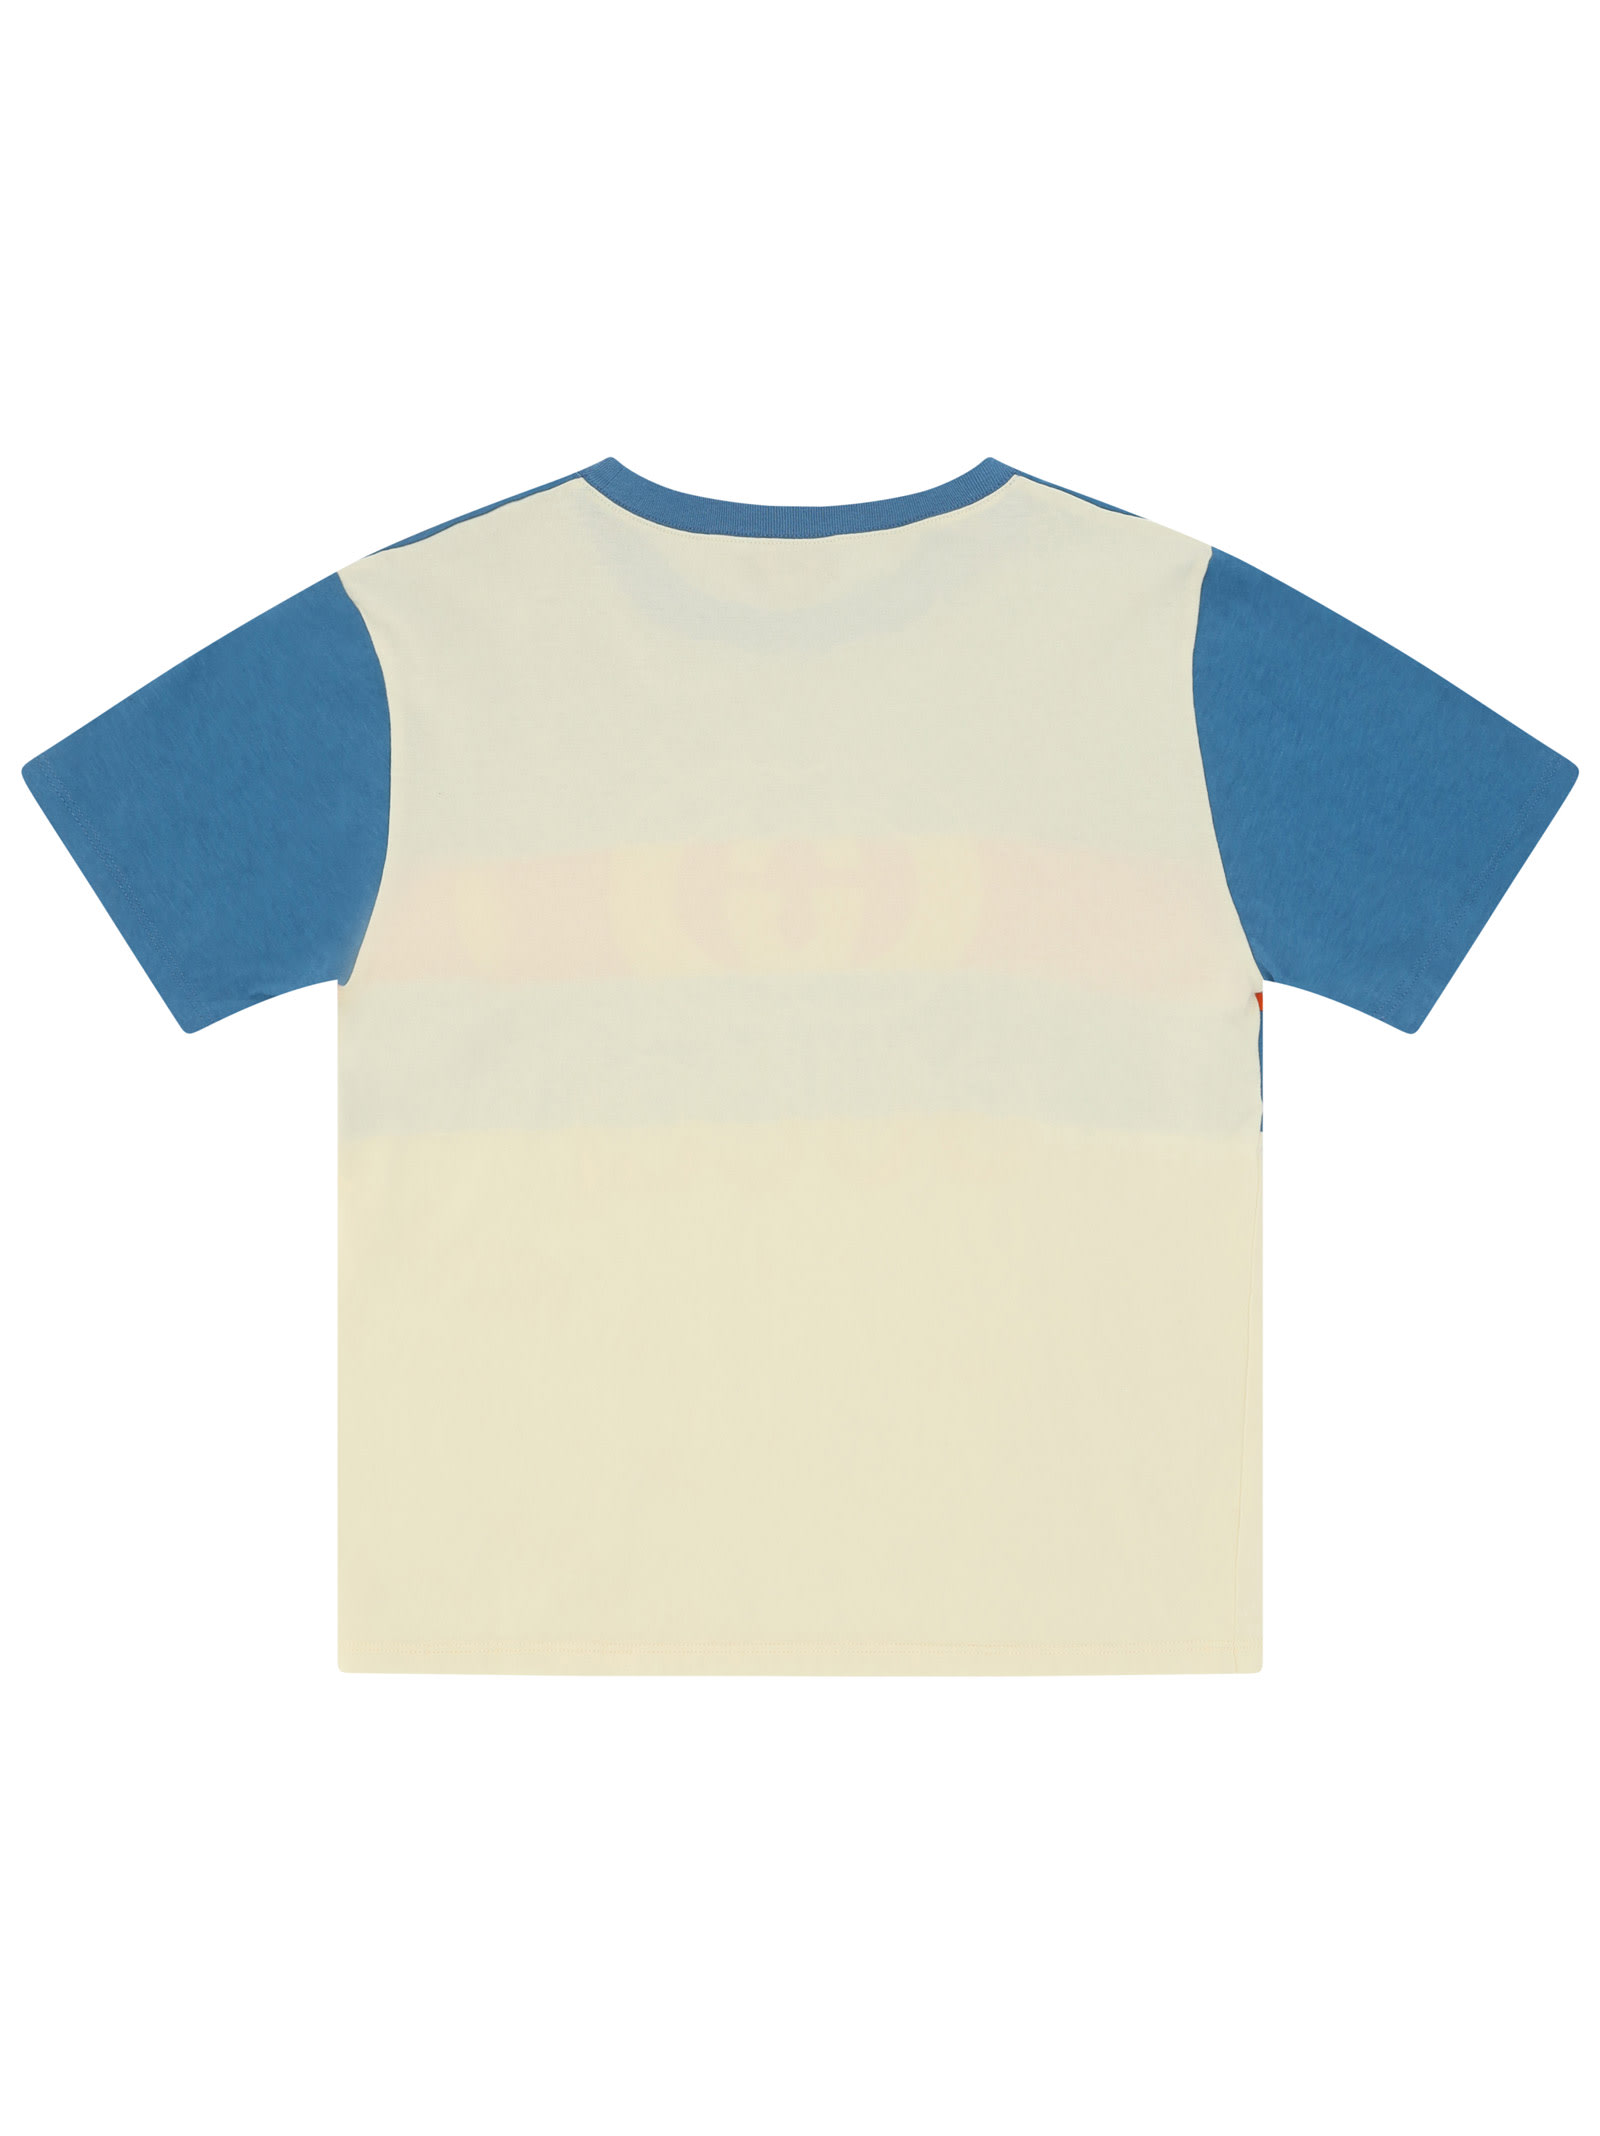 Shop Gucci T-shirt For Boy